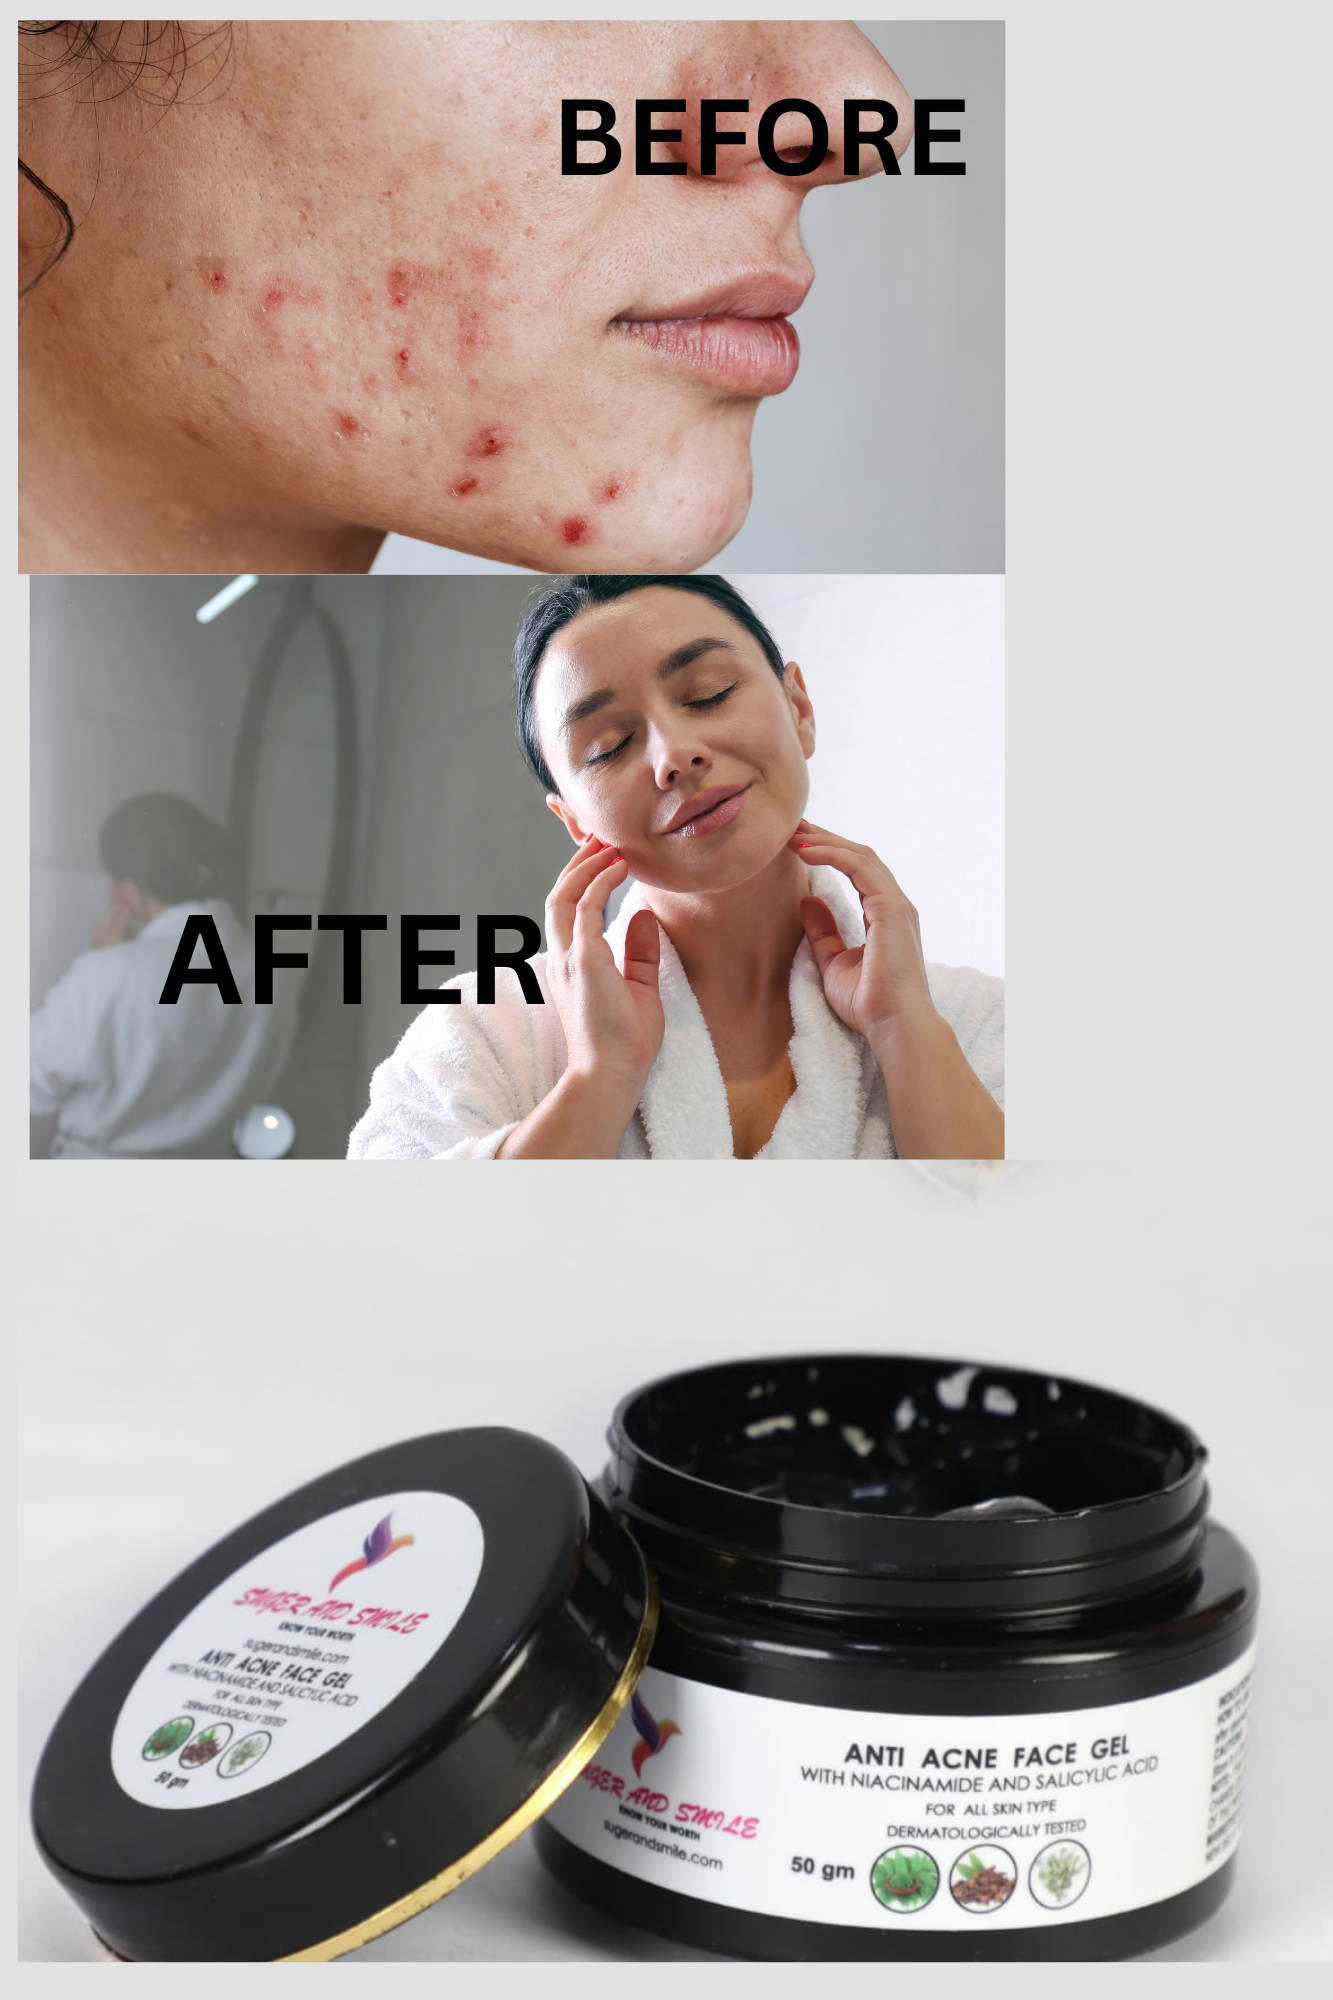 Anti acne face gel(50gm)pack of 2